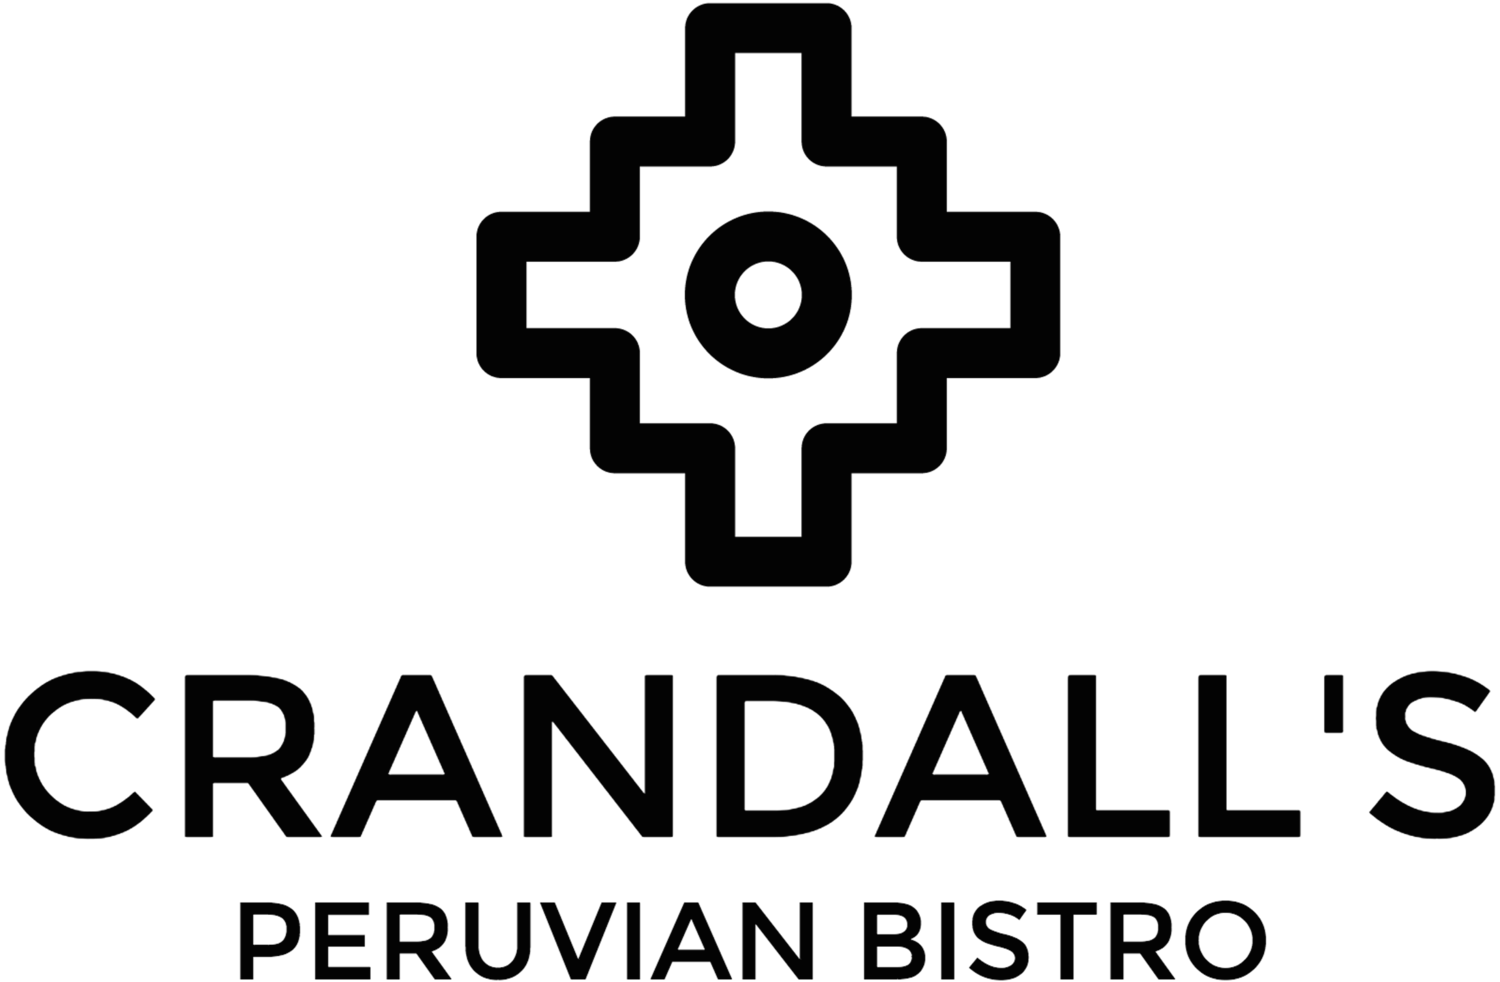 Crandall Logo - Crandall's Peruvian Bistro